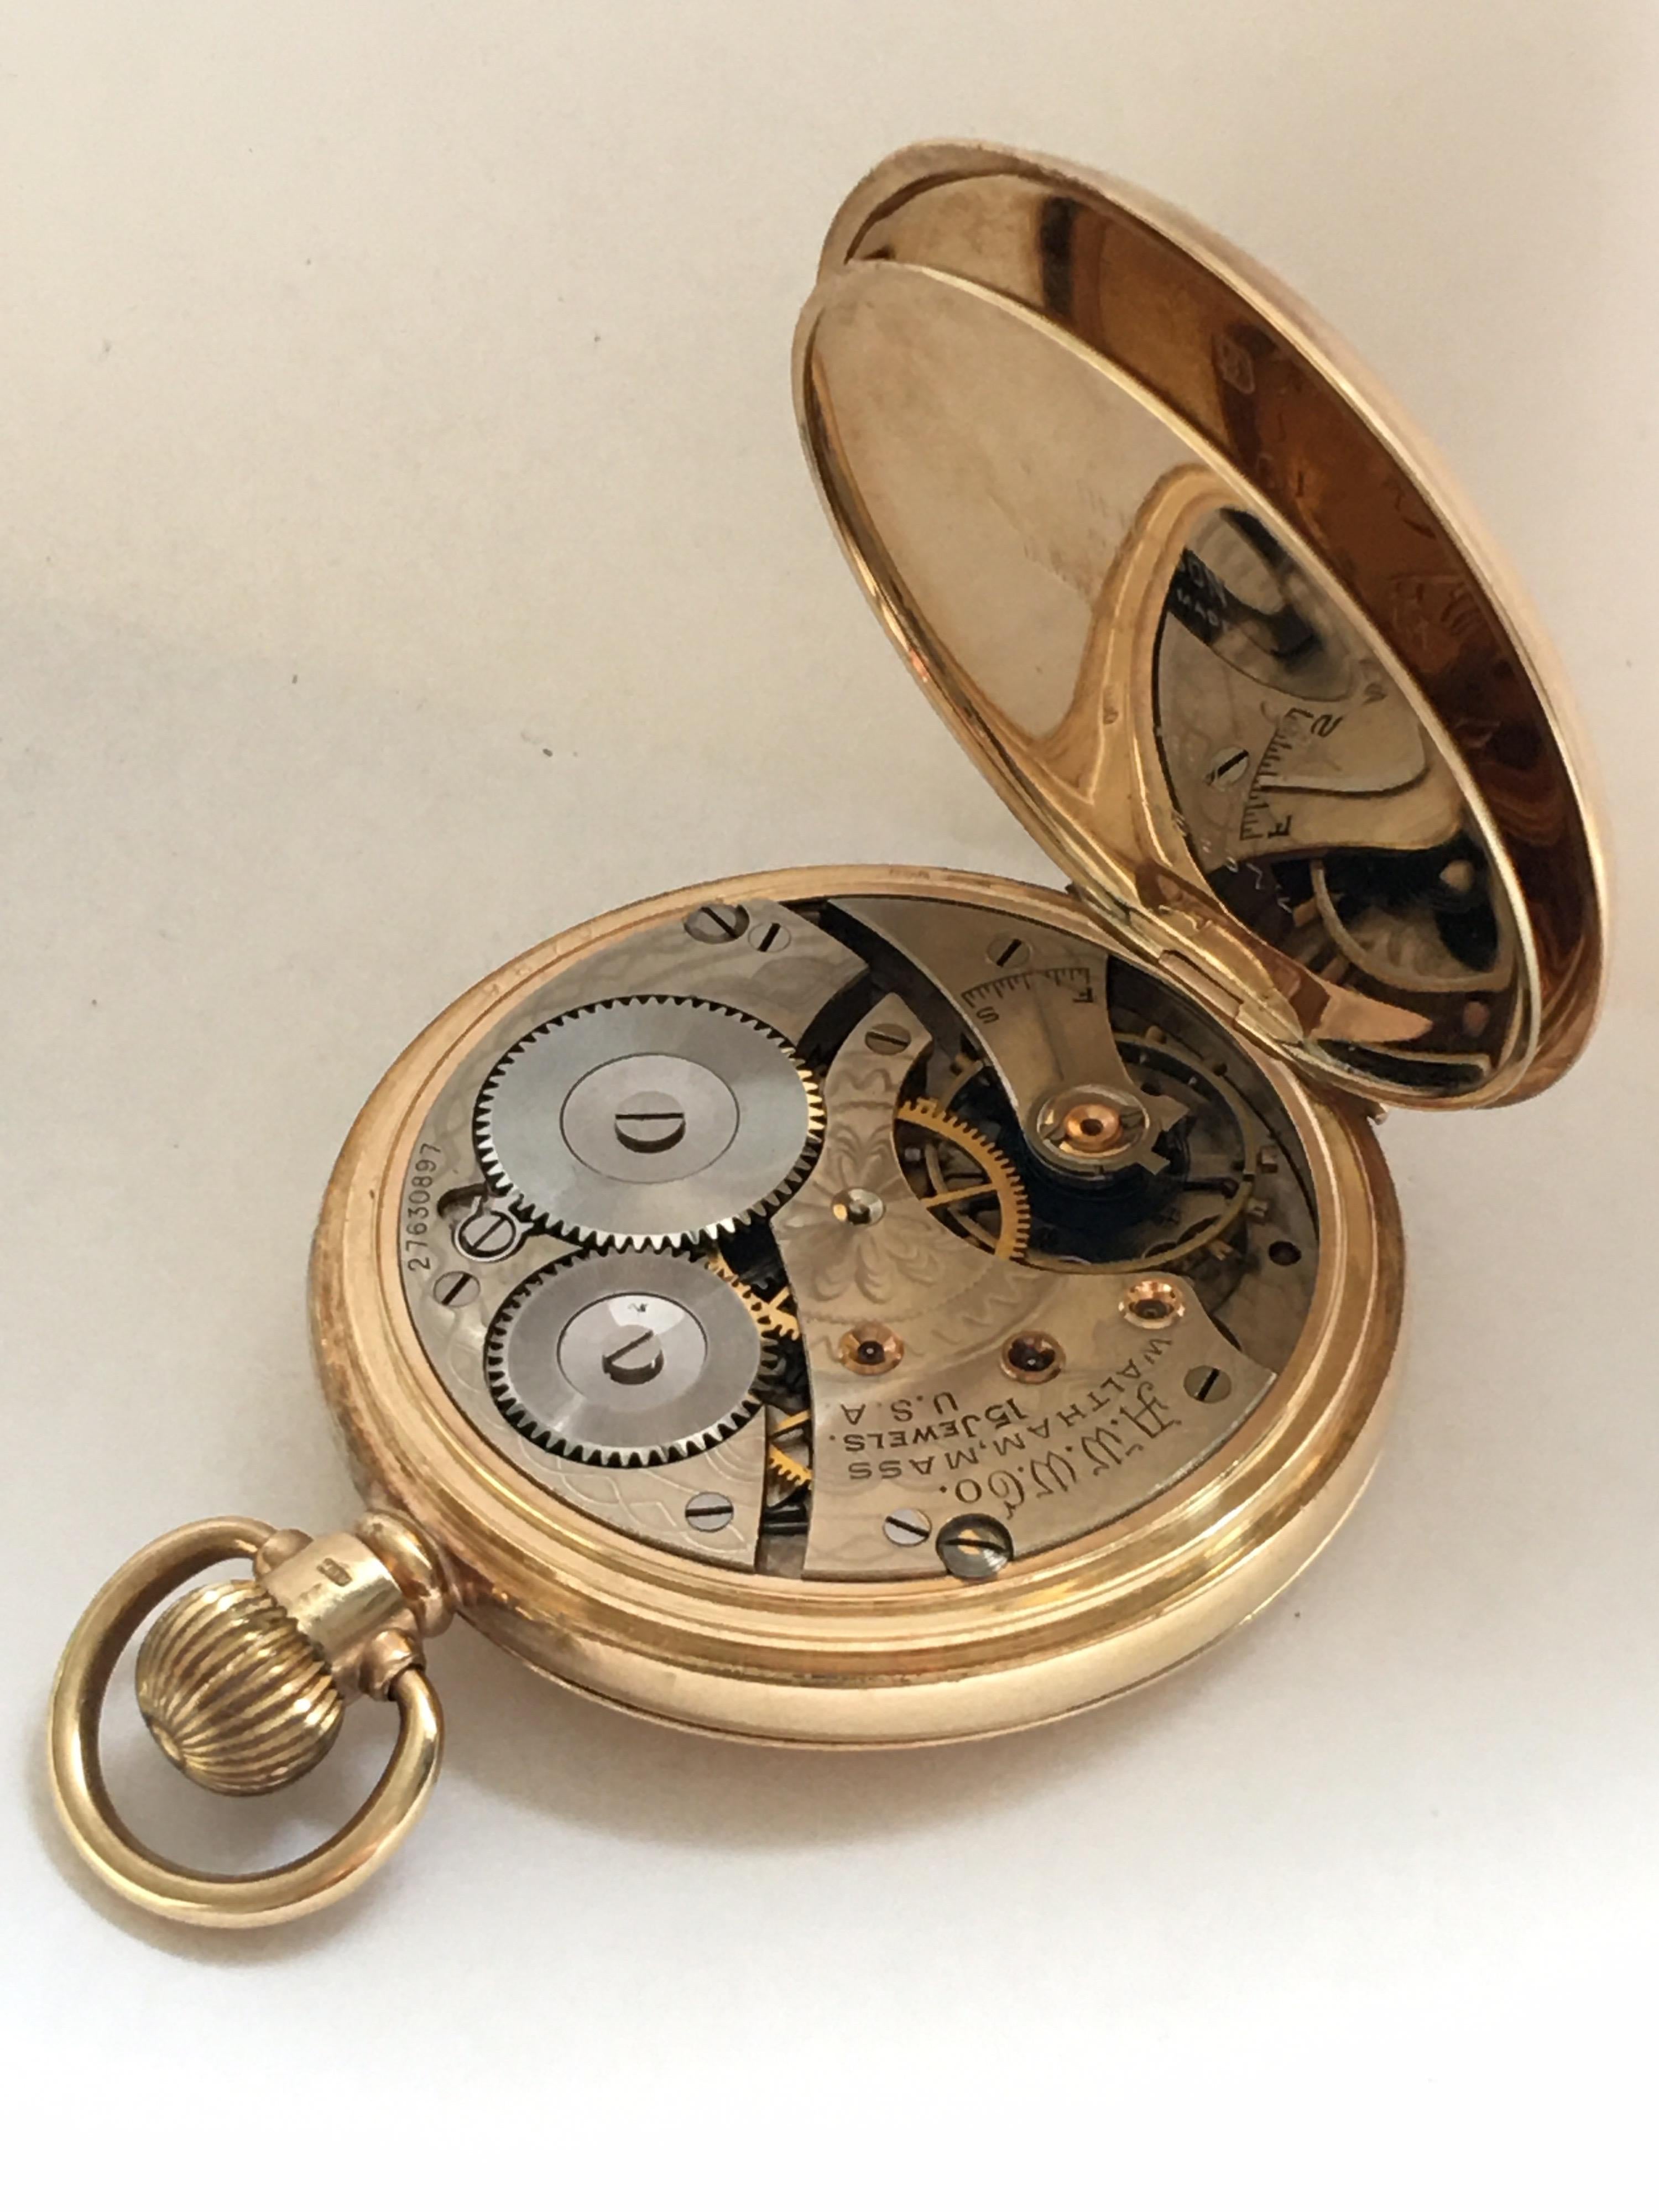 9 Karat Gold Full Hunter Cased Pocket Watch Signed A.W.W. Co. Waltham Mass U.S.A 2